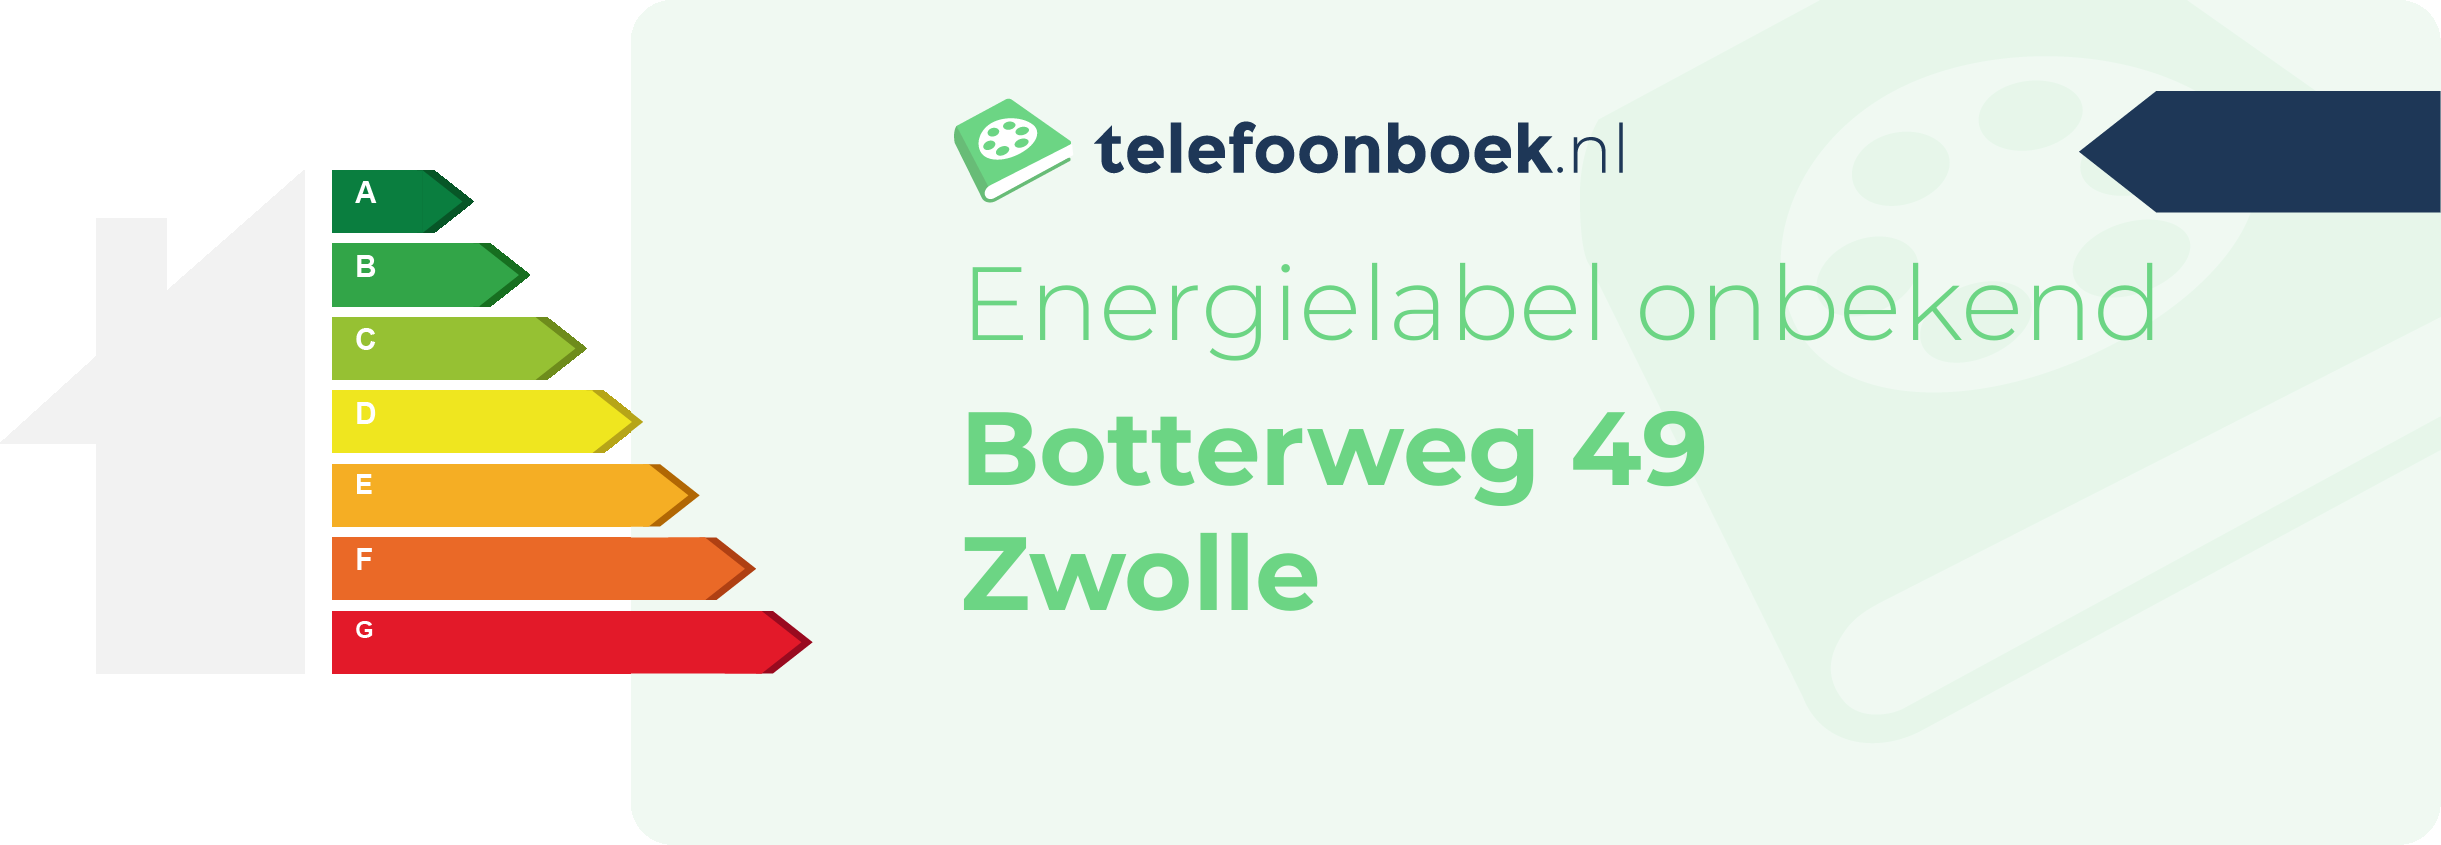 Energielabel Botterweg 49 Zwolle